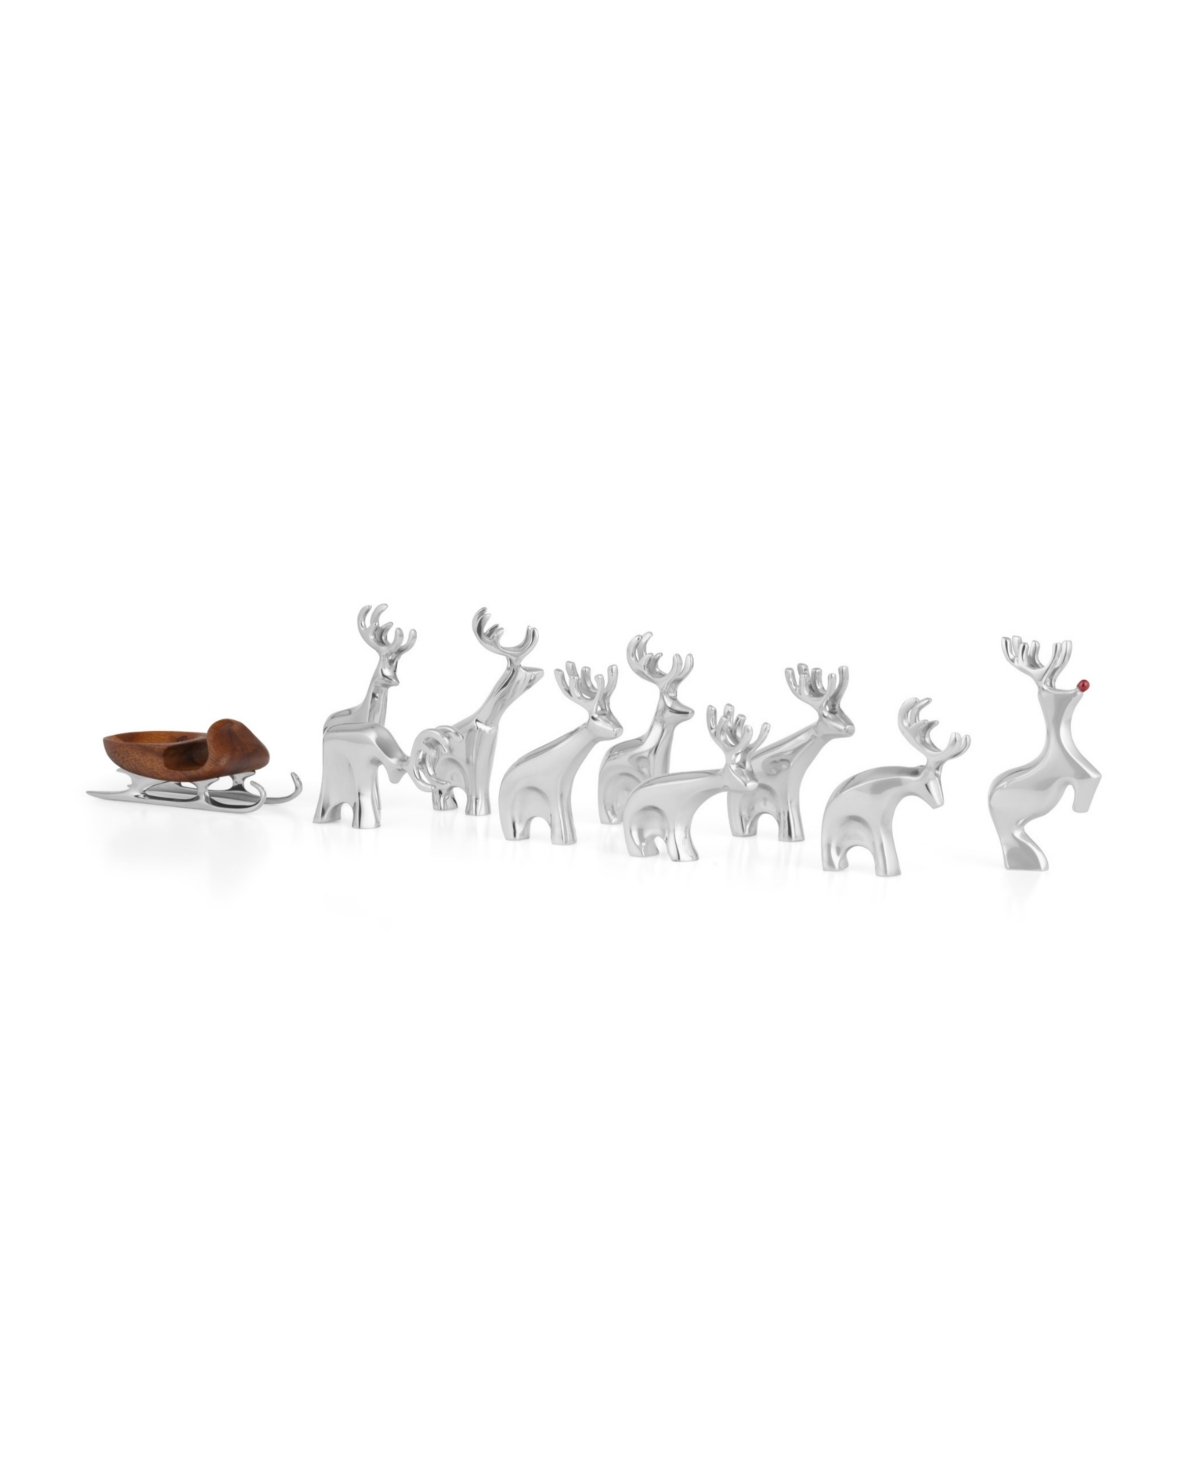 Mini Reindeer Set, 10 Piece - Silver-Tone